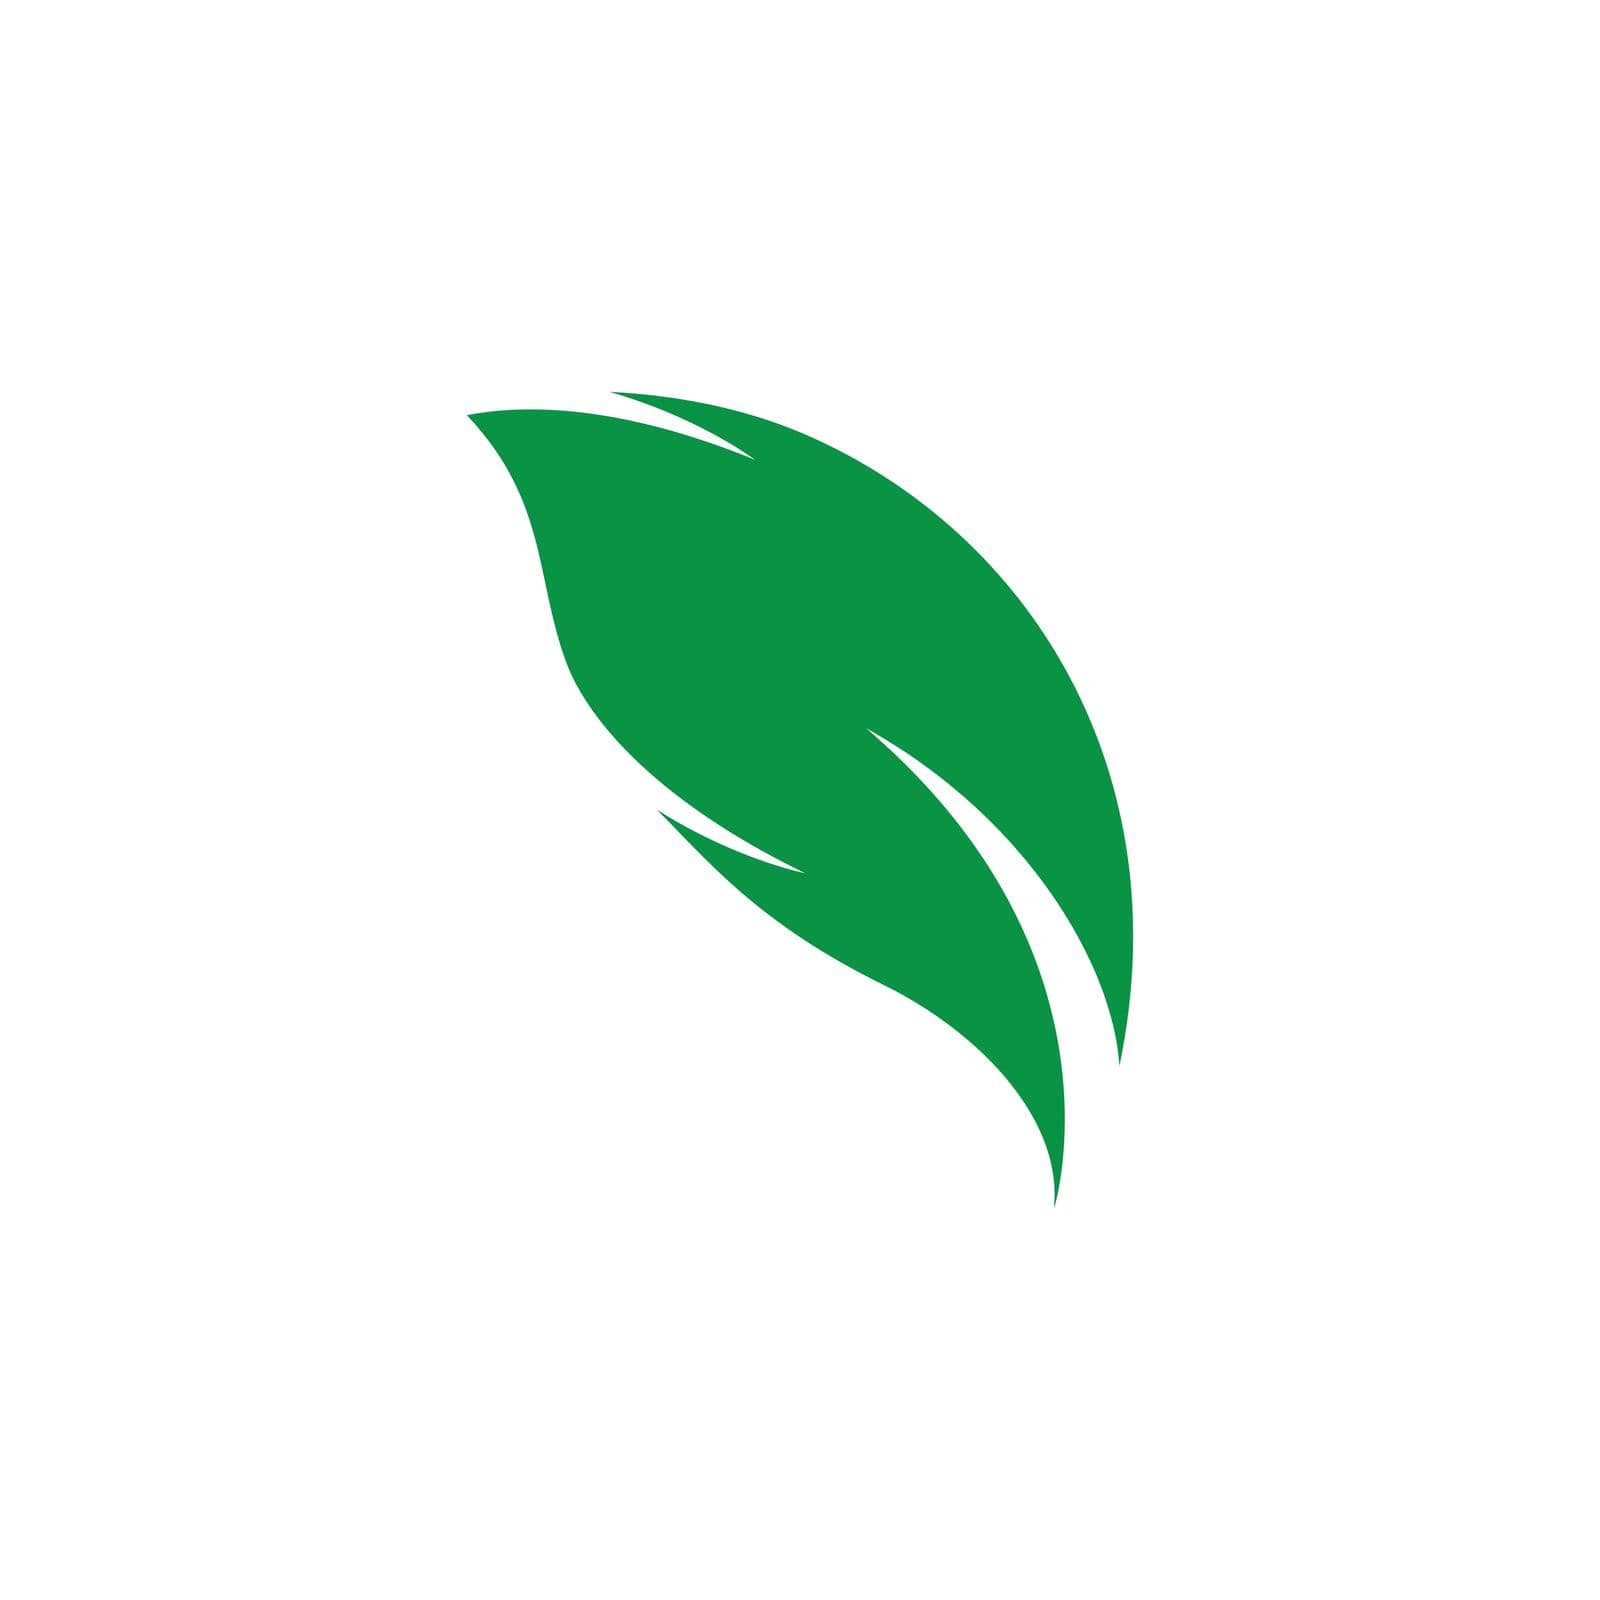 Leaf symbol vector icon by Fat17